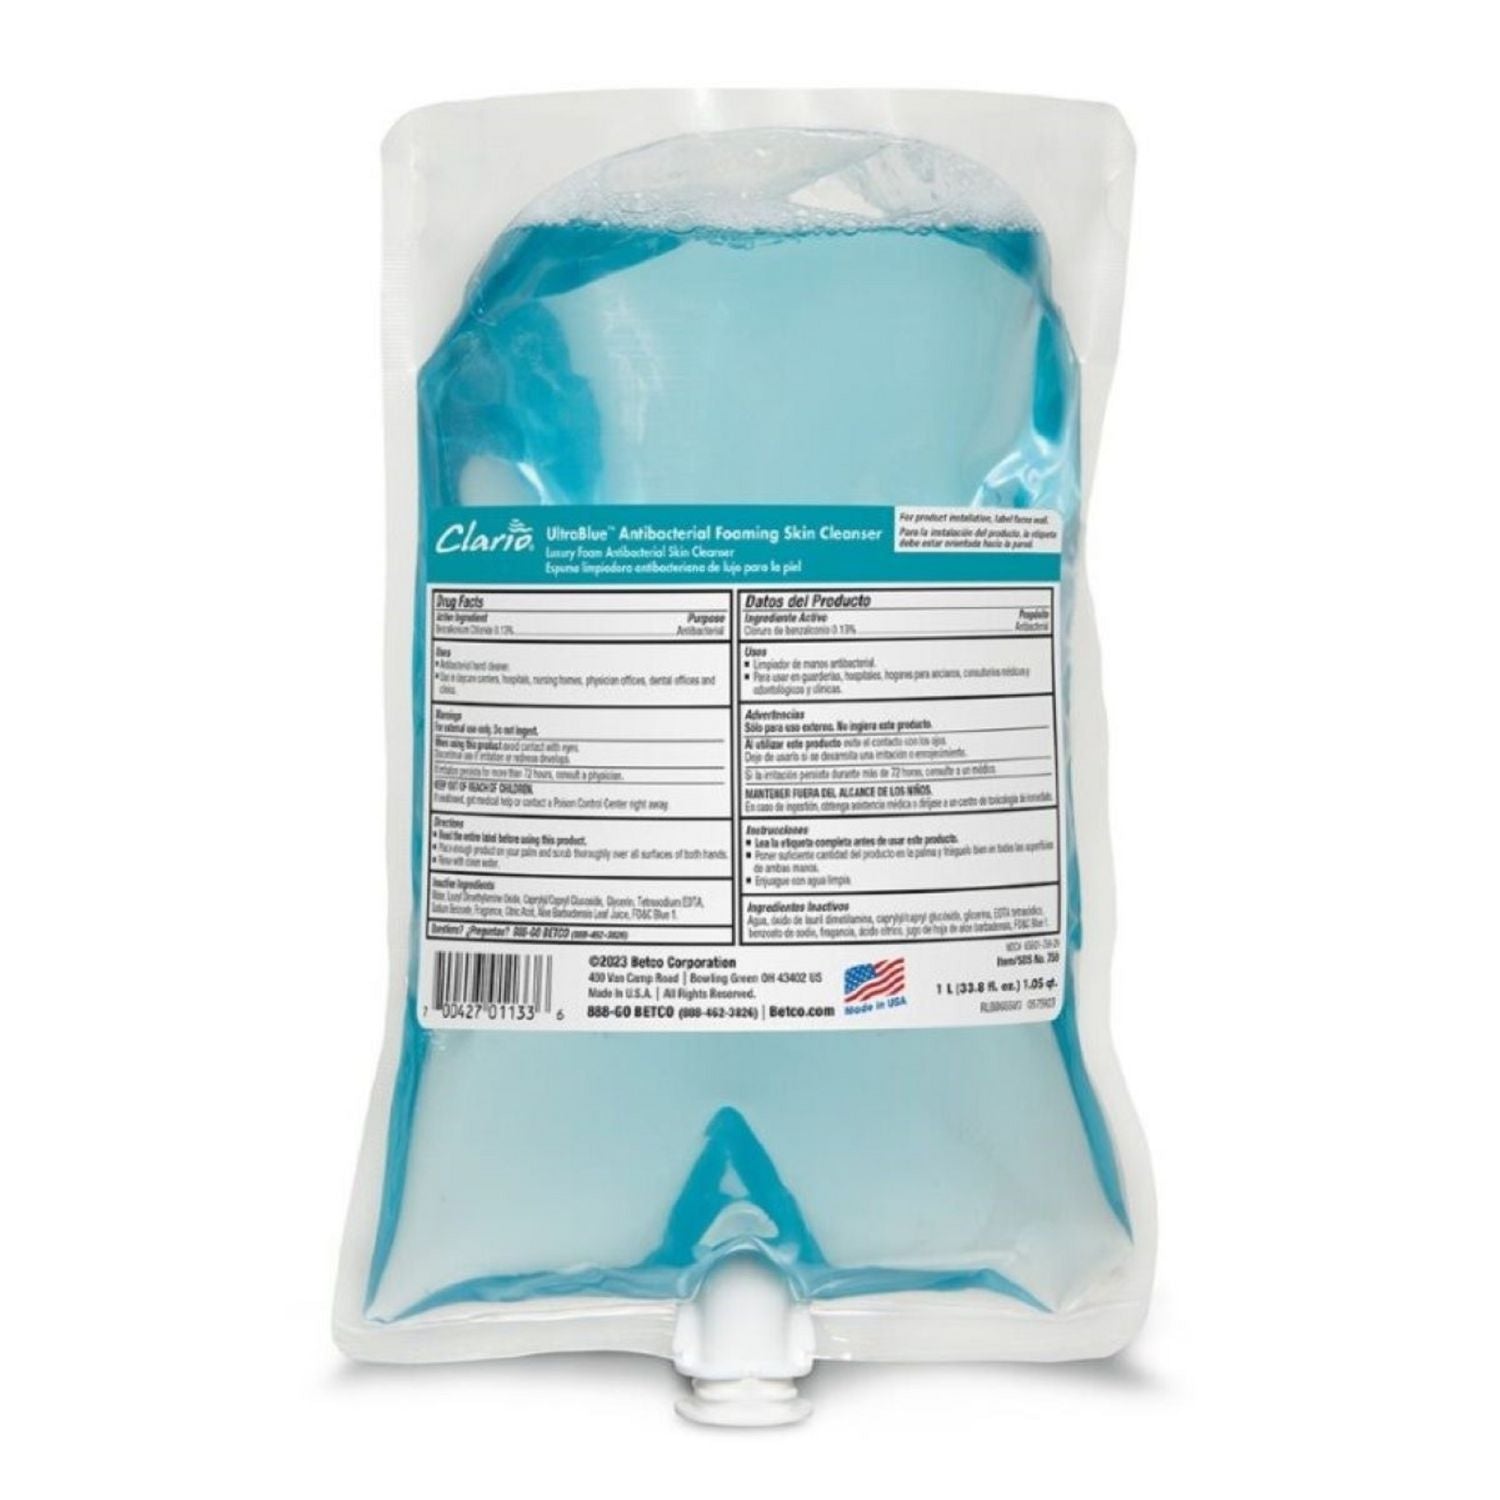 ultrablue-antibacterial-foaming-skin-cleanser-fragrance-free-1000-ml-refill-bag-6-carton_bet7592900 - 1